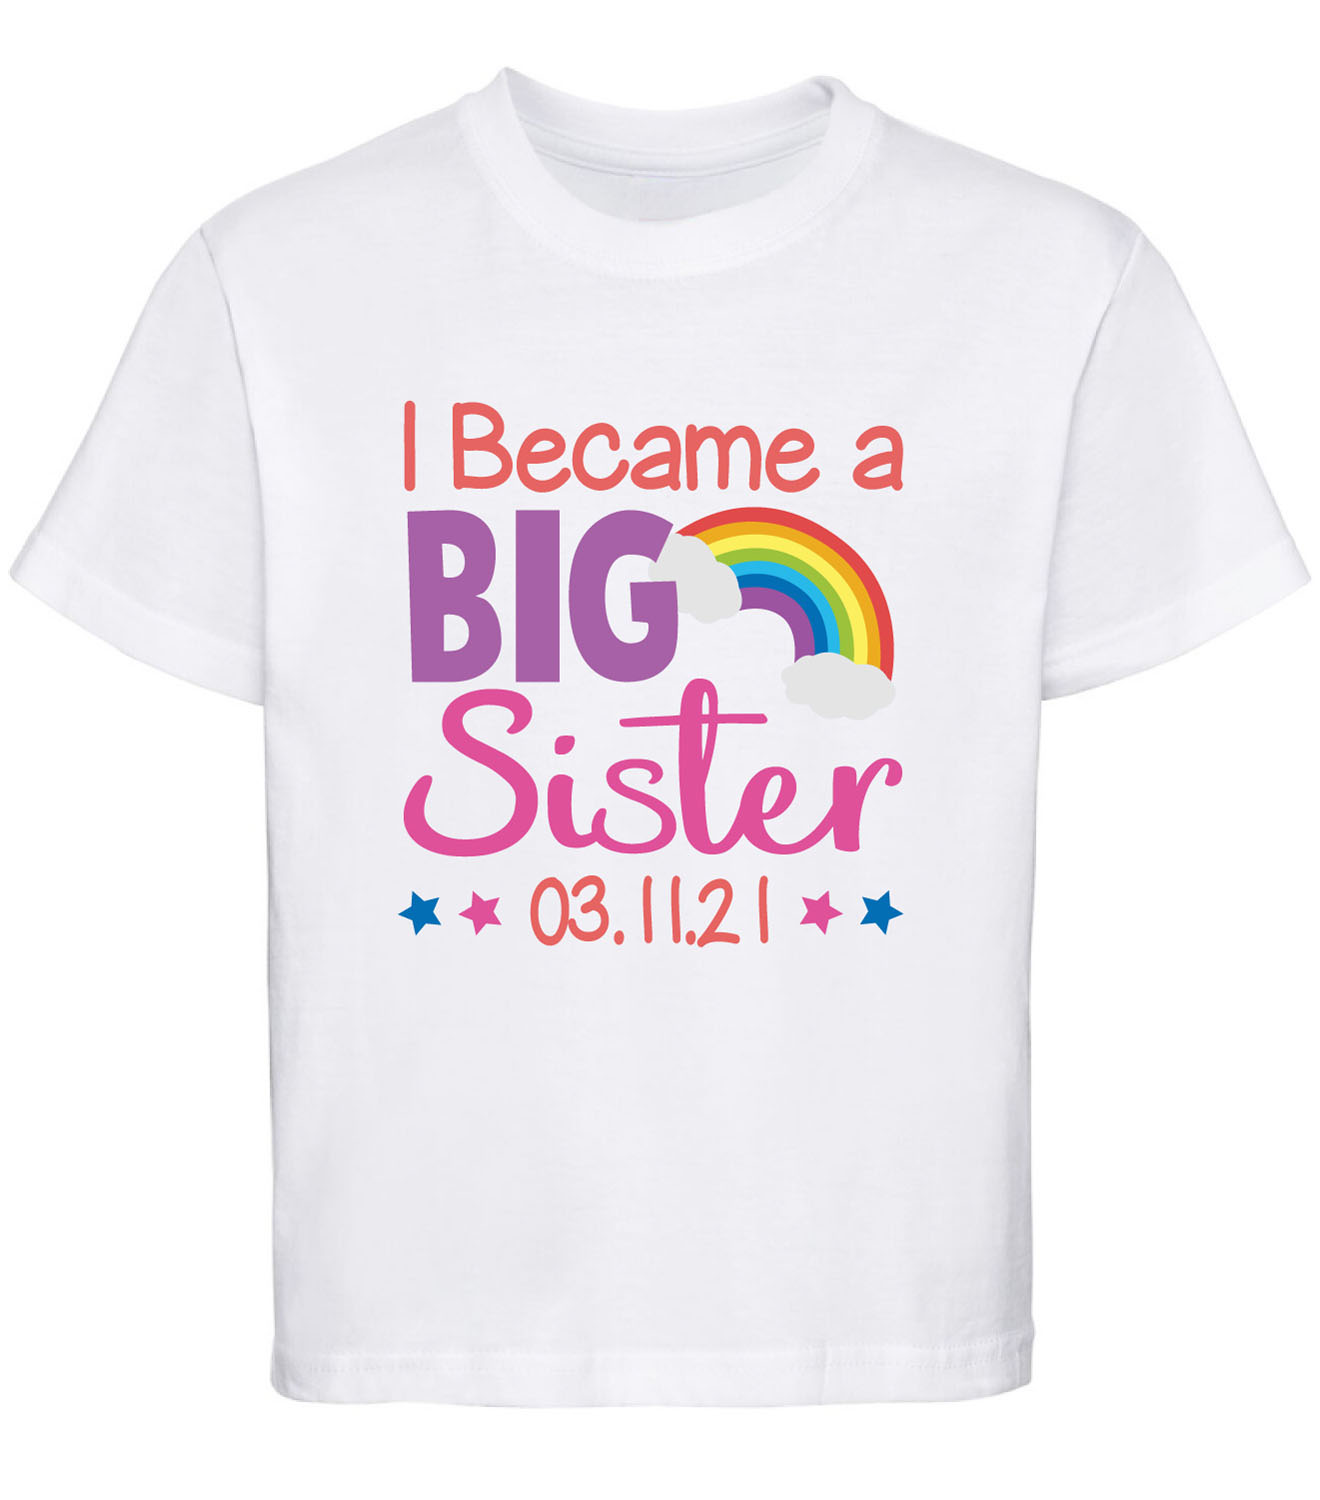 Big Sister Little Sister Shirt Personalized Unicorn Shirt Girl Set of 2 Shirts unicorn Gift Set 